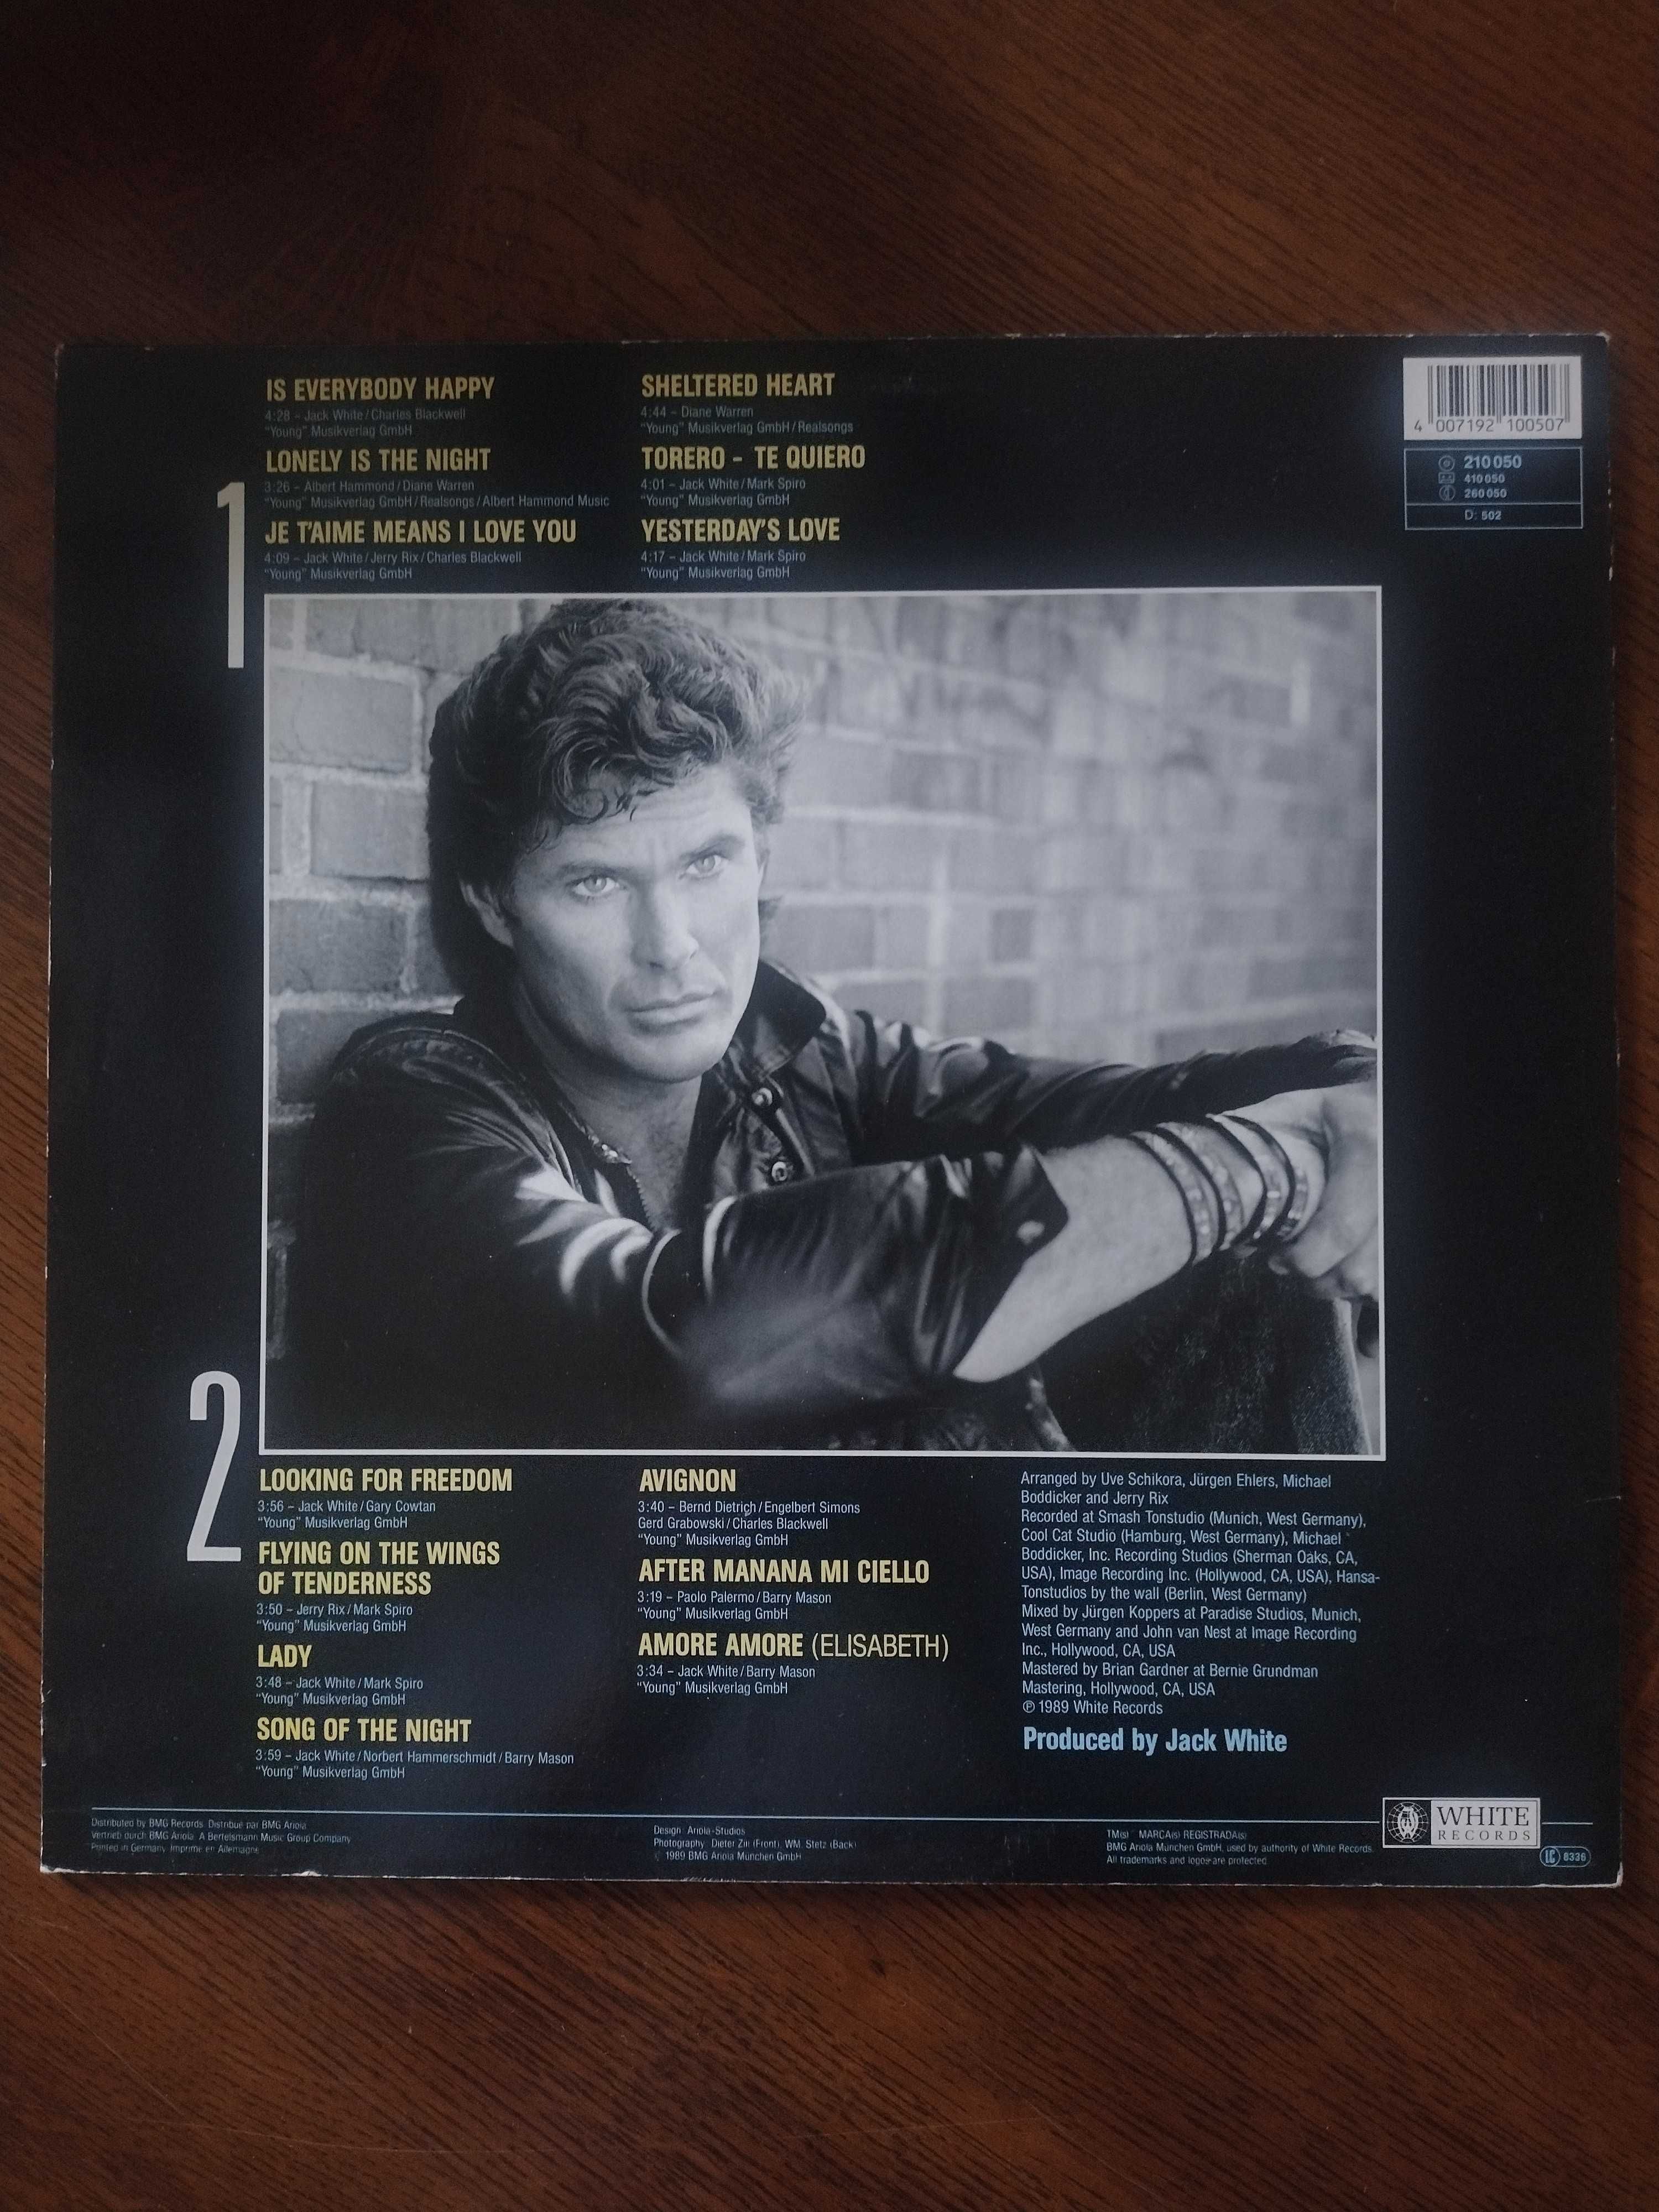 Płyta winylowa - David Hasselhoff  - LP